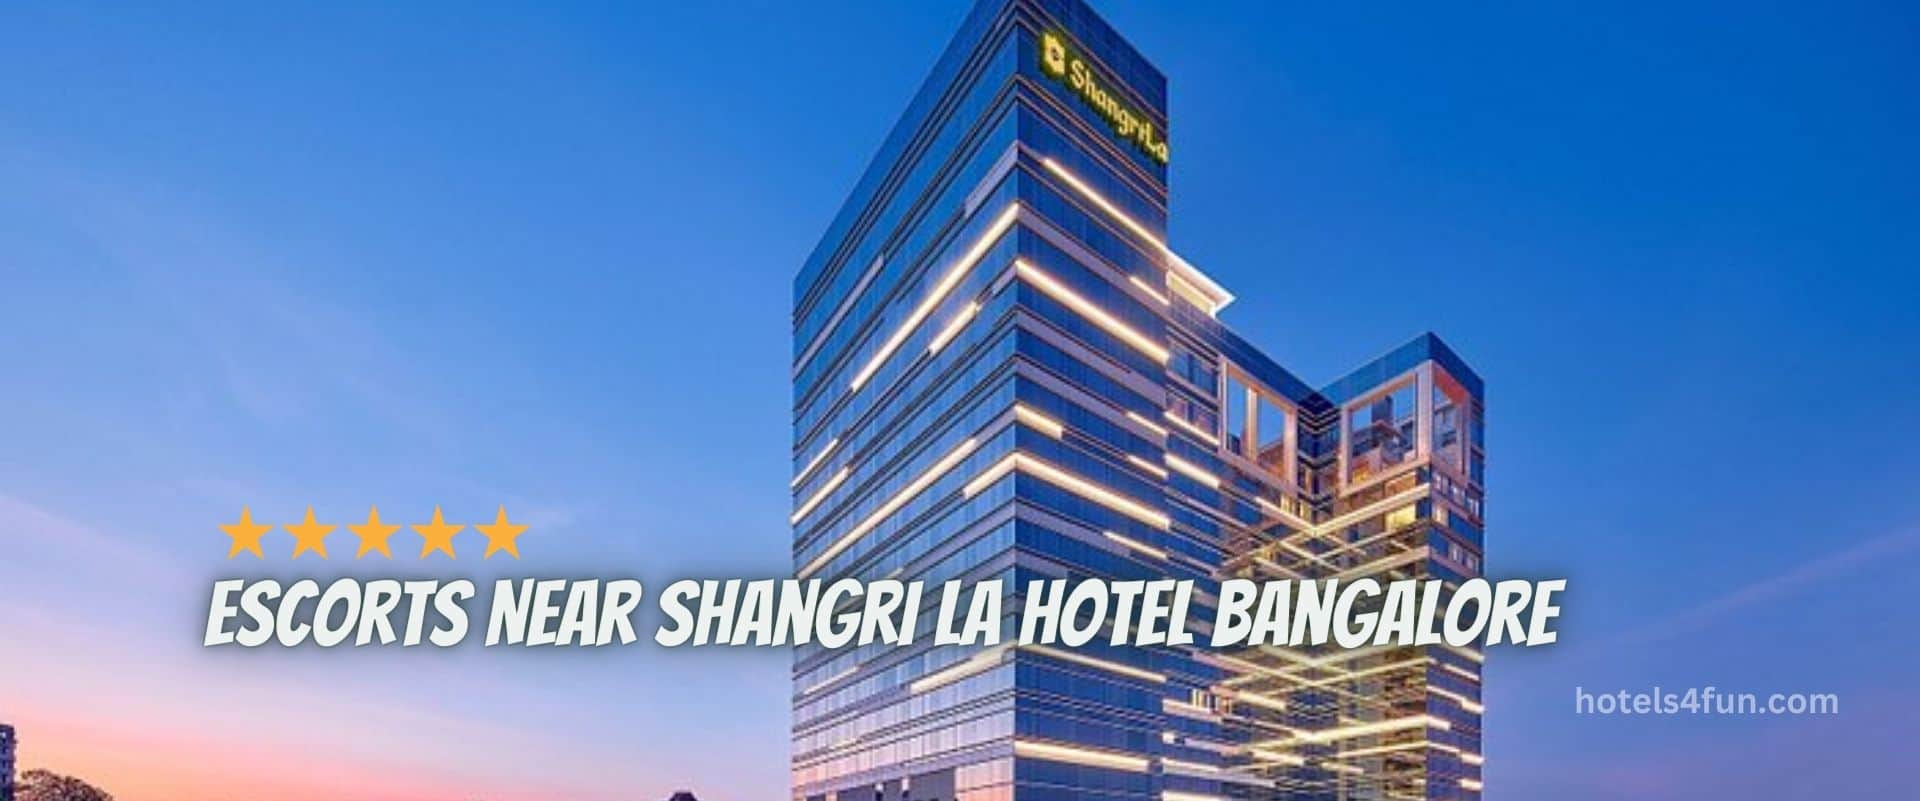 escorts-near-shangri-la-hotel-bangalore Hotel Escorts